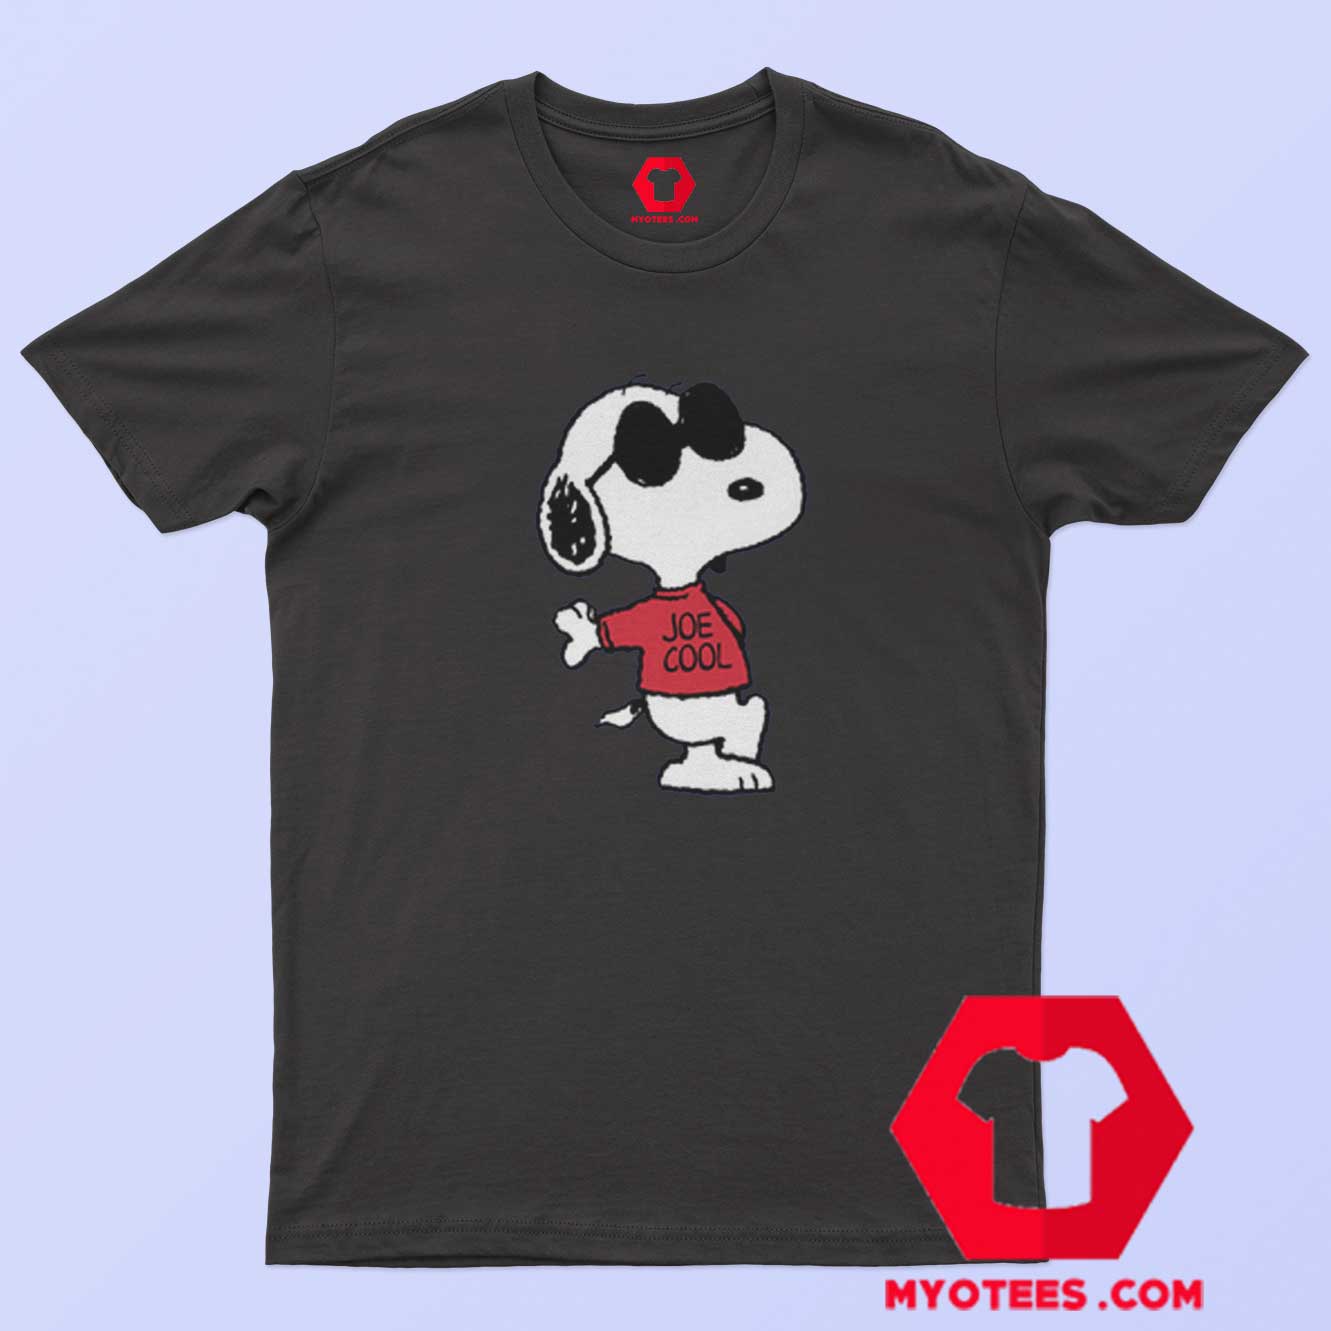 Peanuts Joe Cool Snoopy Peanuts Graphic T-shirt On Sale | myotees.com